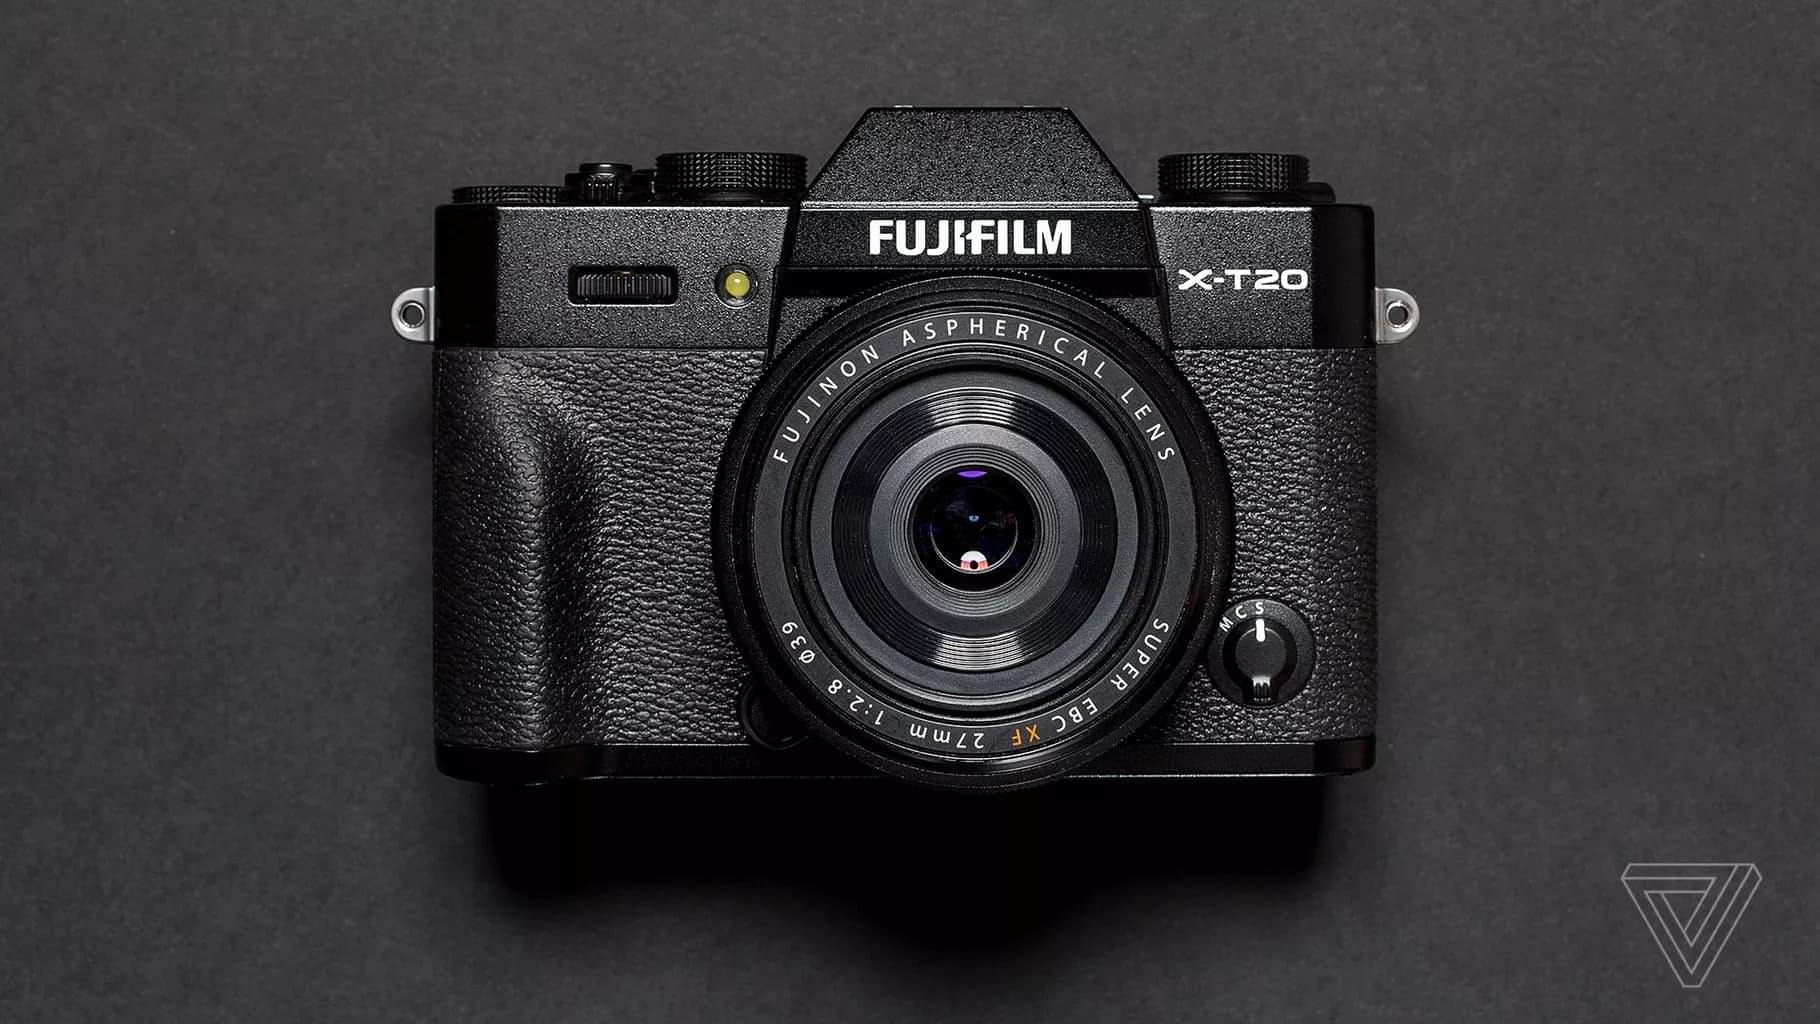 Máy ảnh Fujifilm X-T20 (Black)